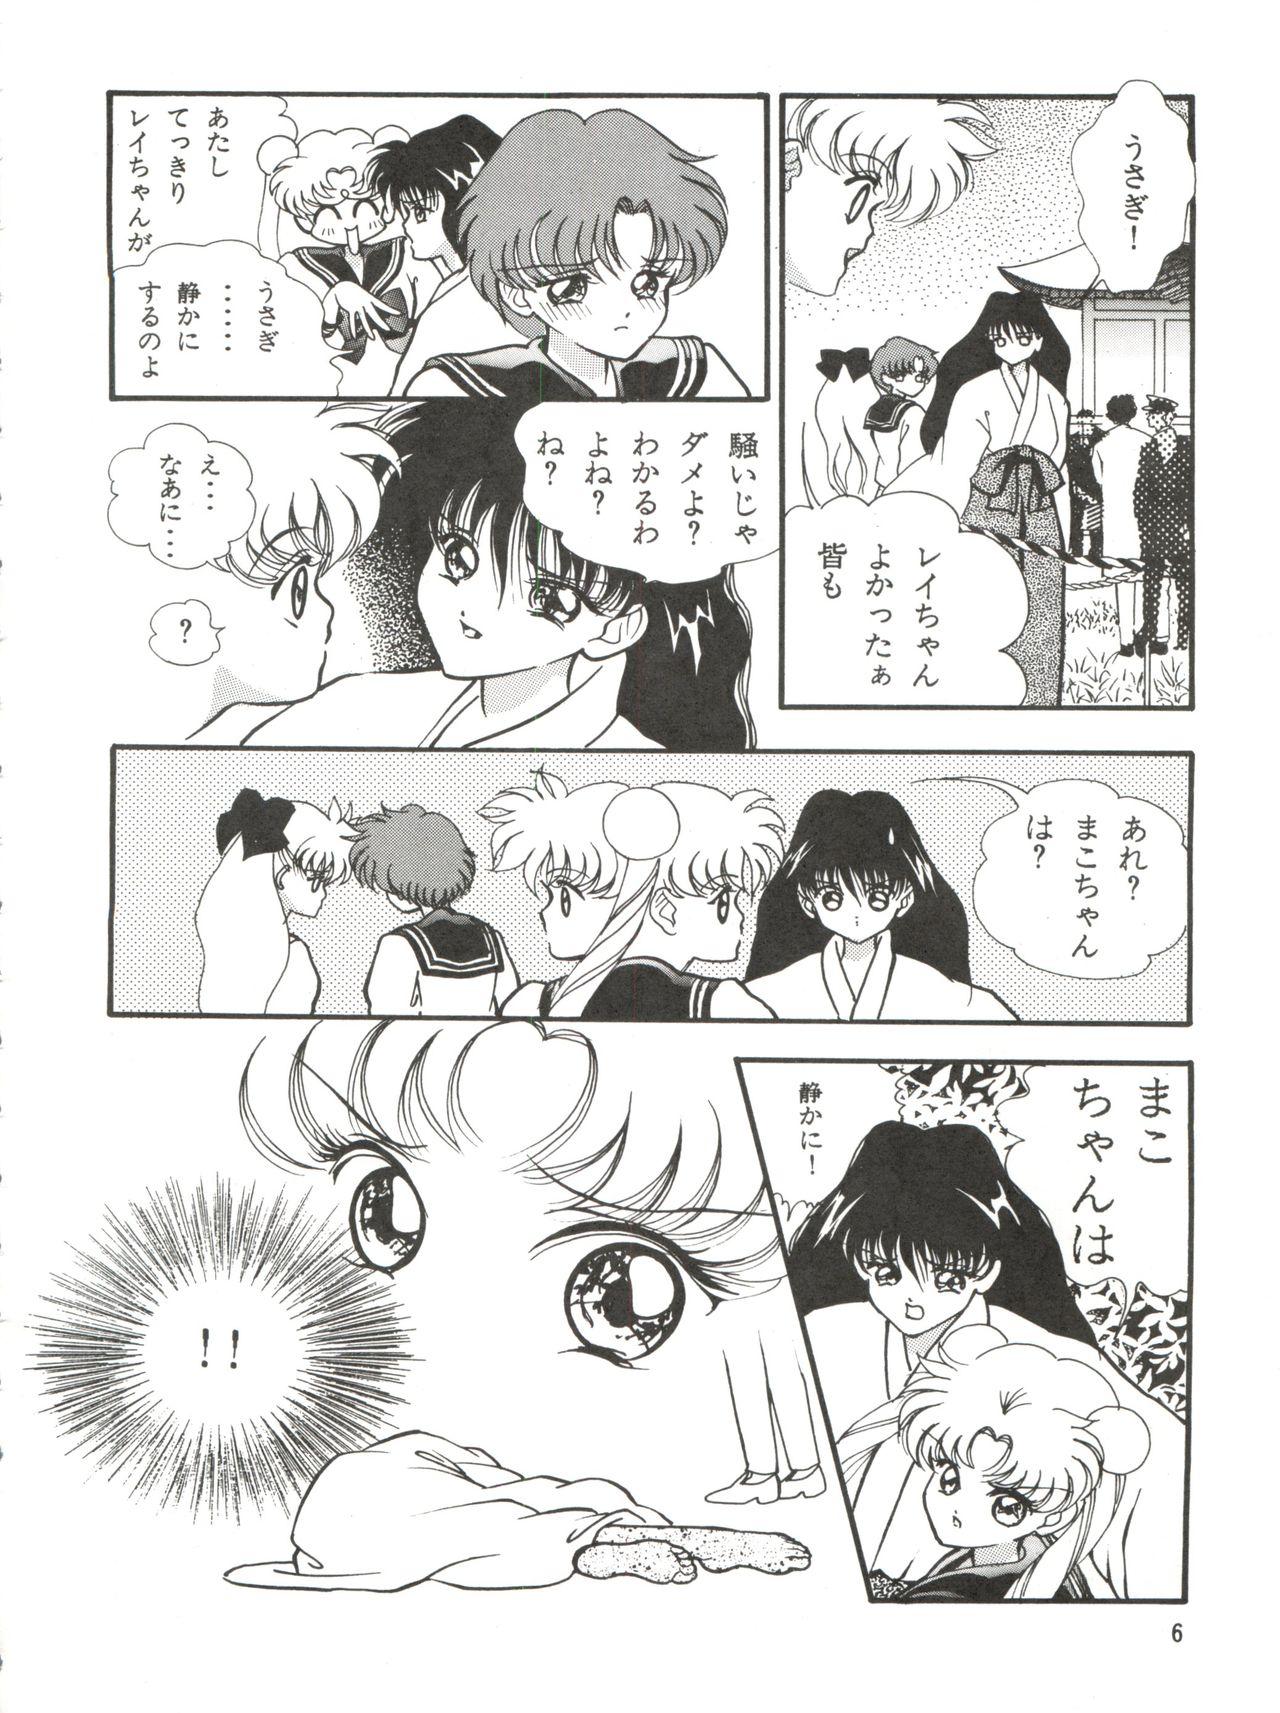 Flashing Aoi no Mercury - Sailor moon Stepdad - Page 7